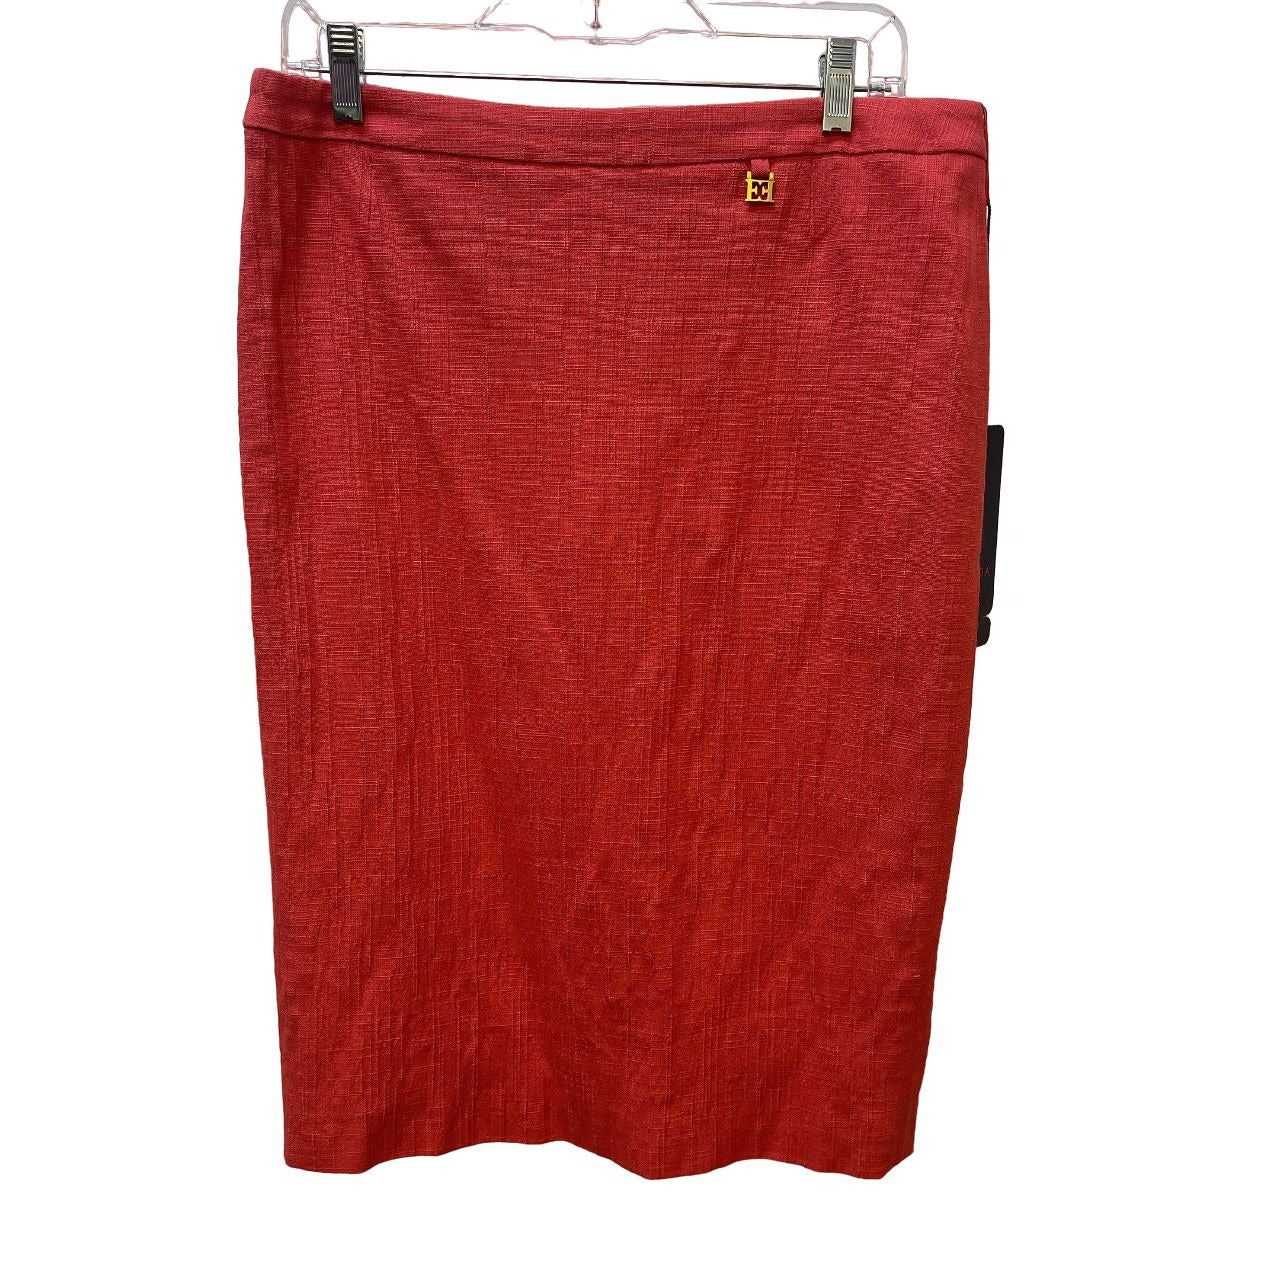 *NWT Escada Coral Pencil Skirt Size 40